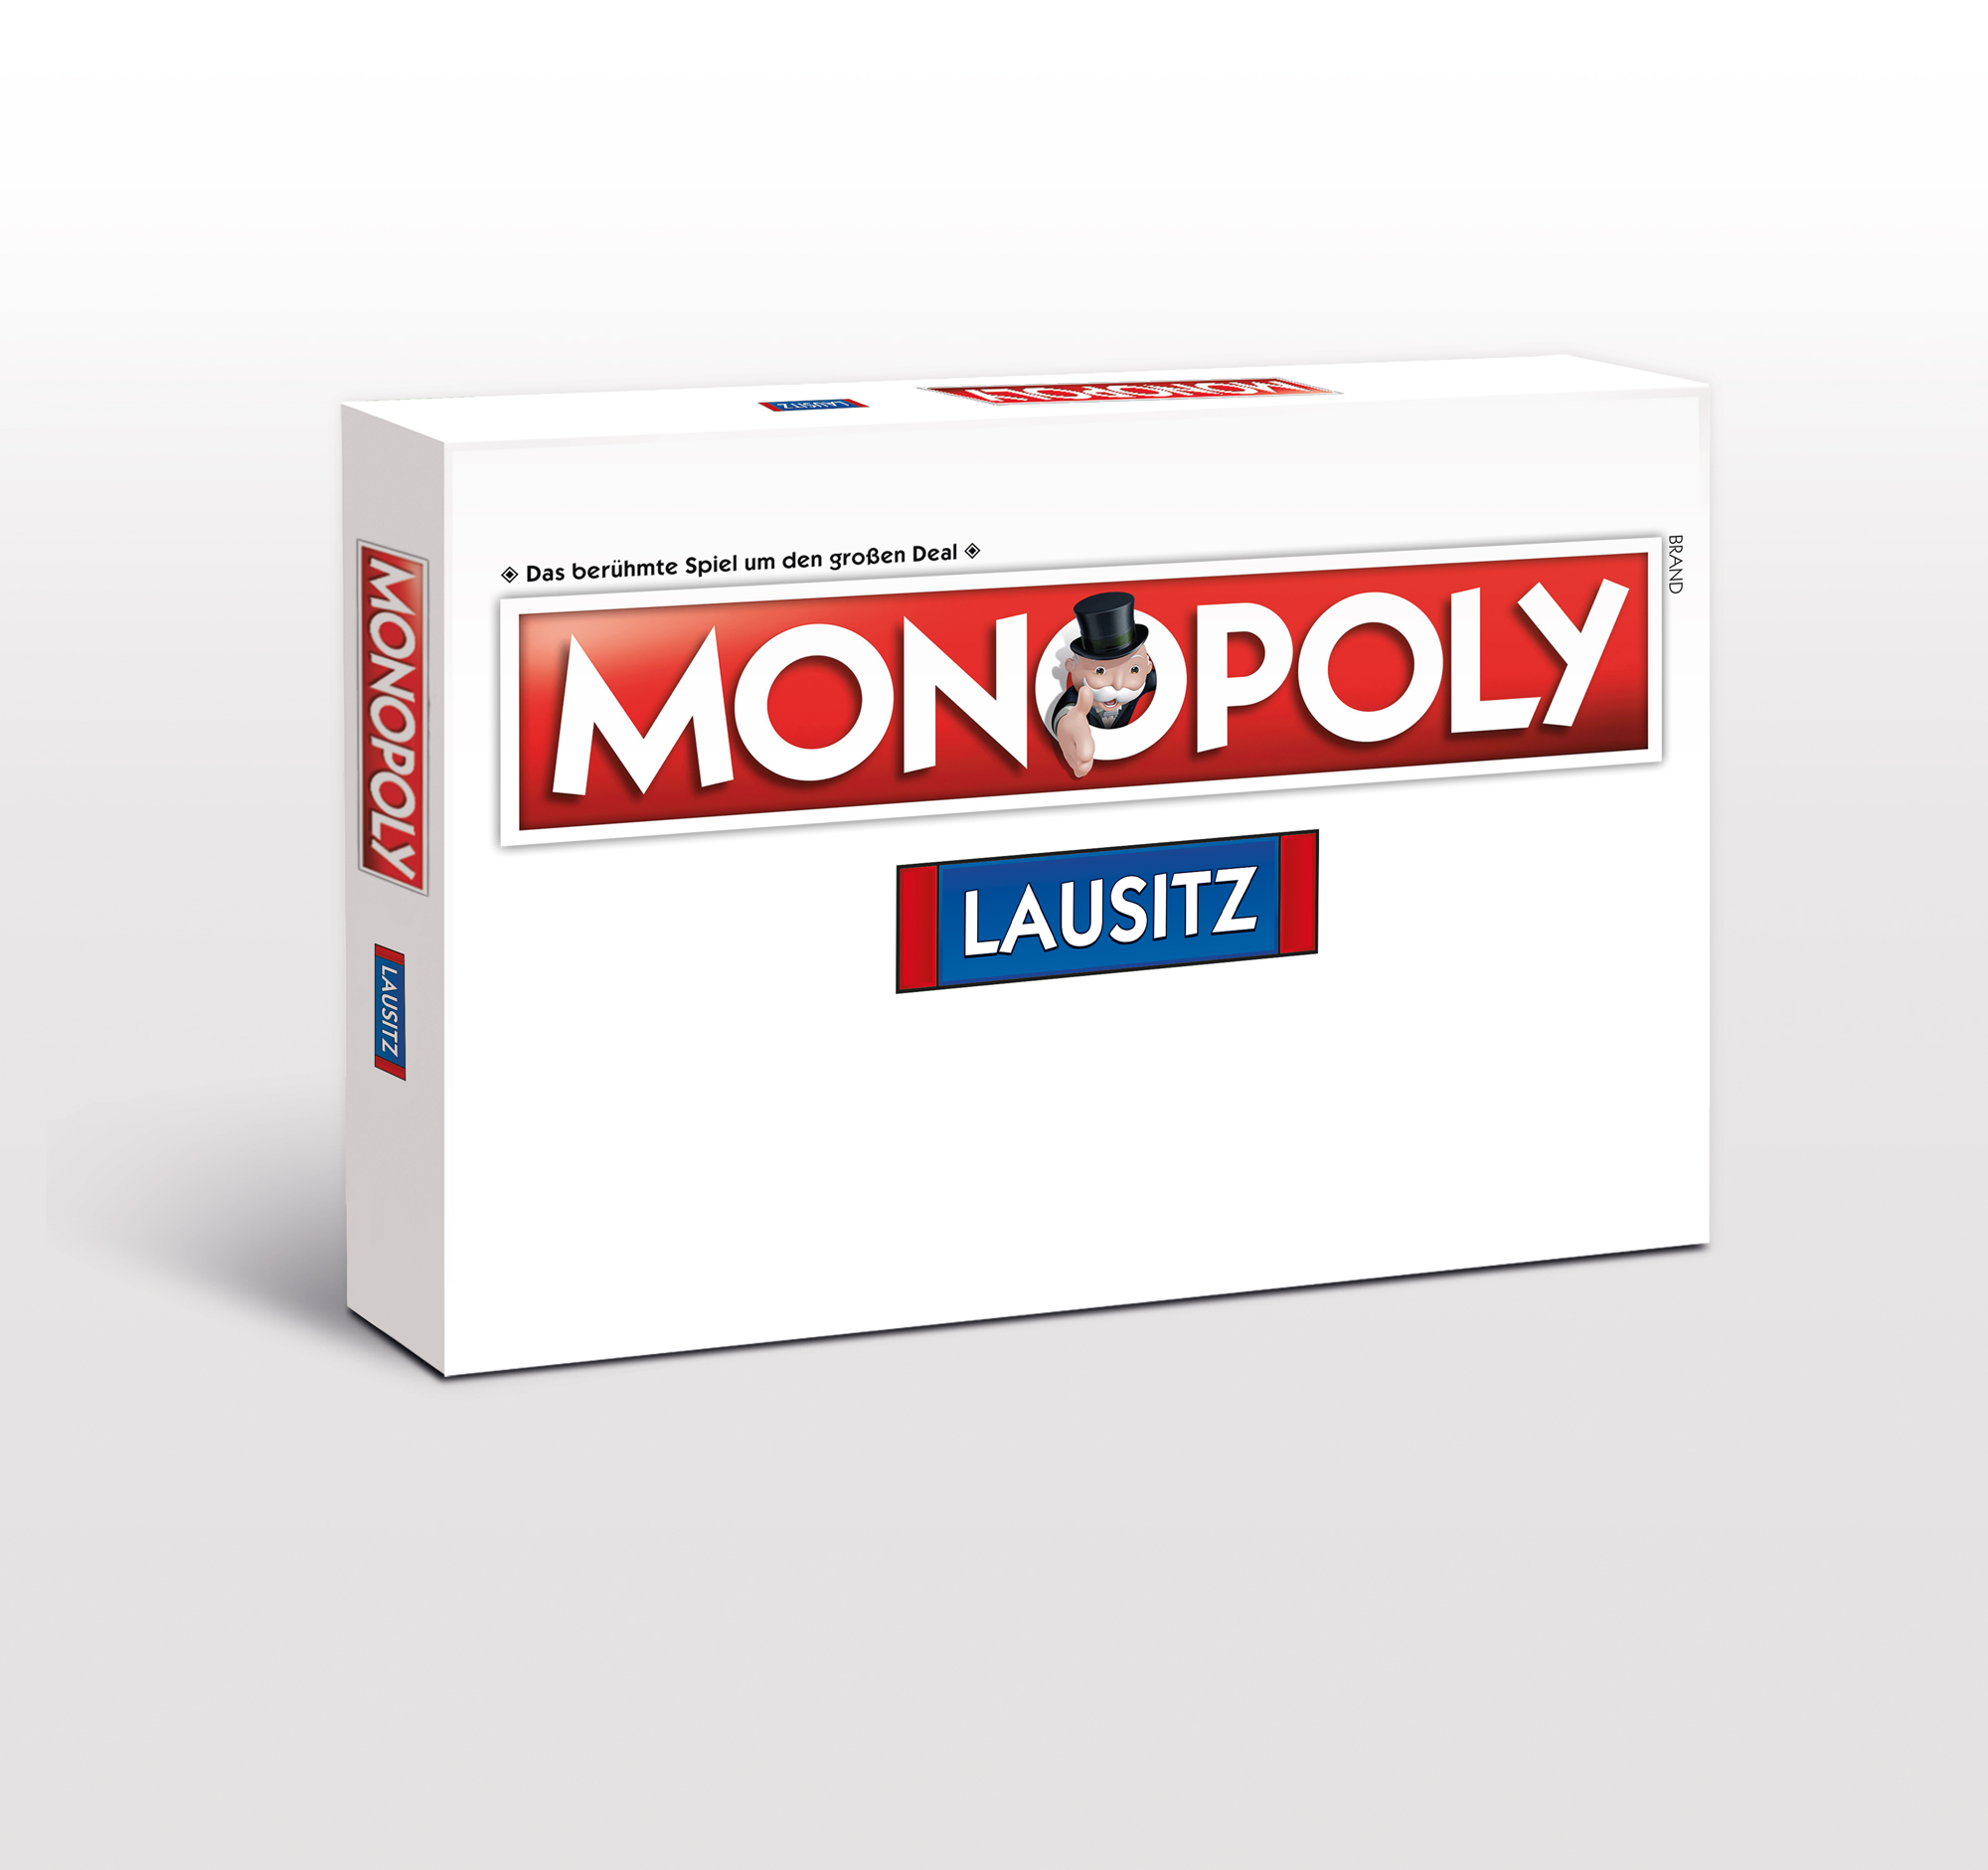 monopoly lausitz dummy design